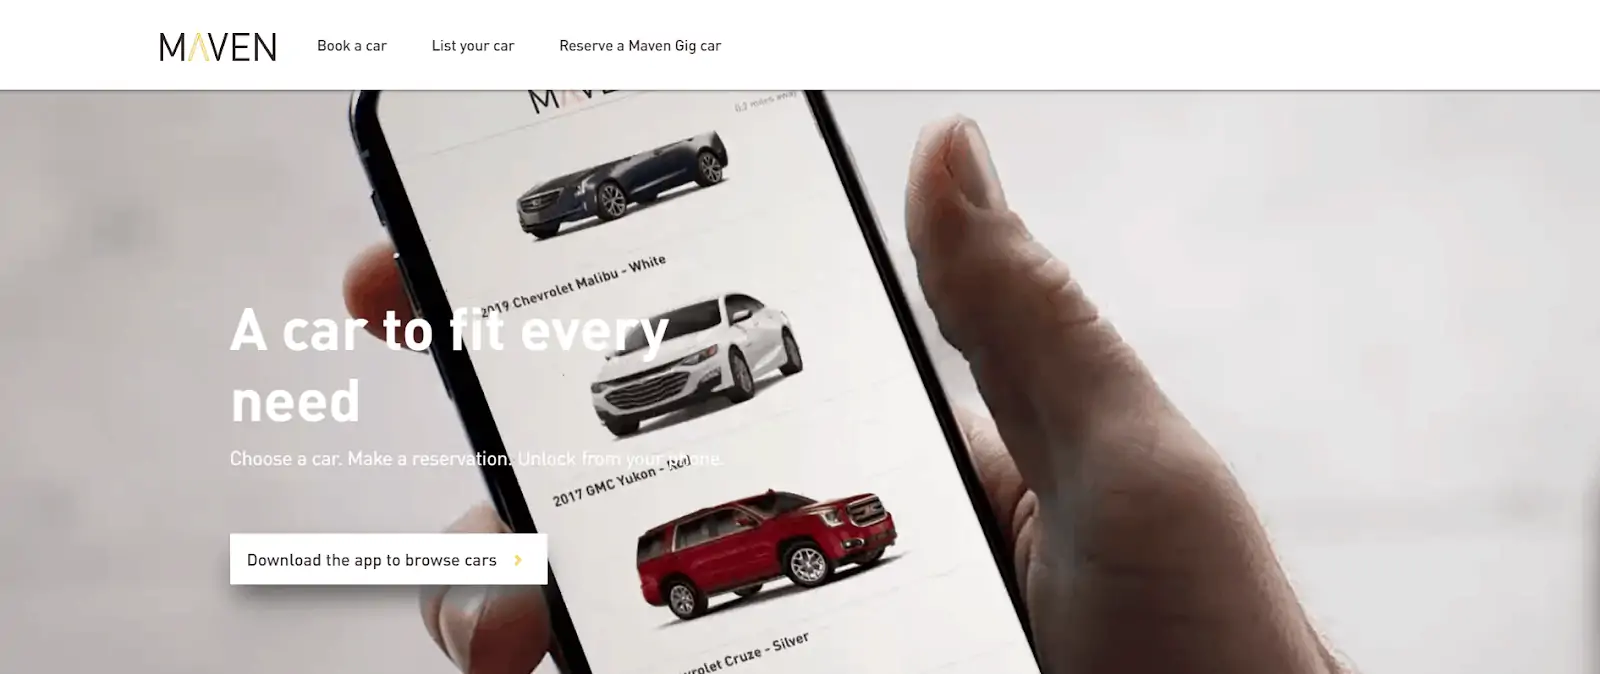 Car share: The Maven homepage